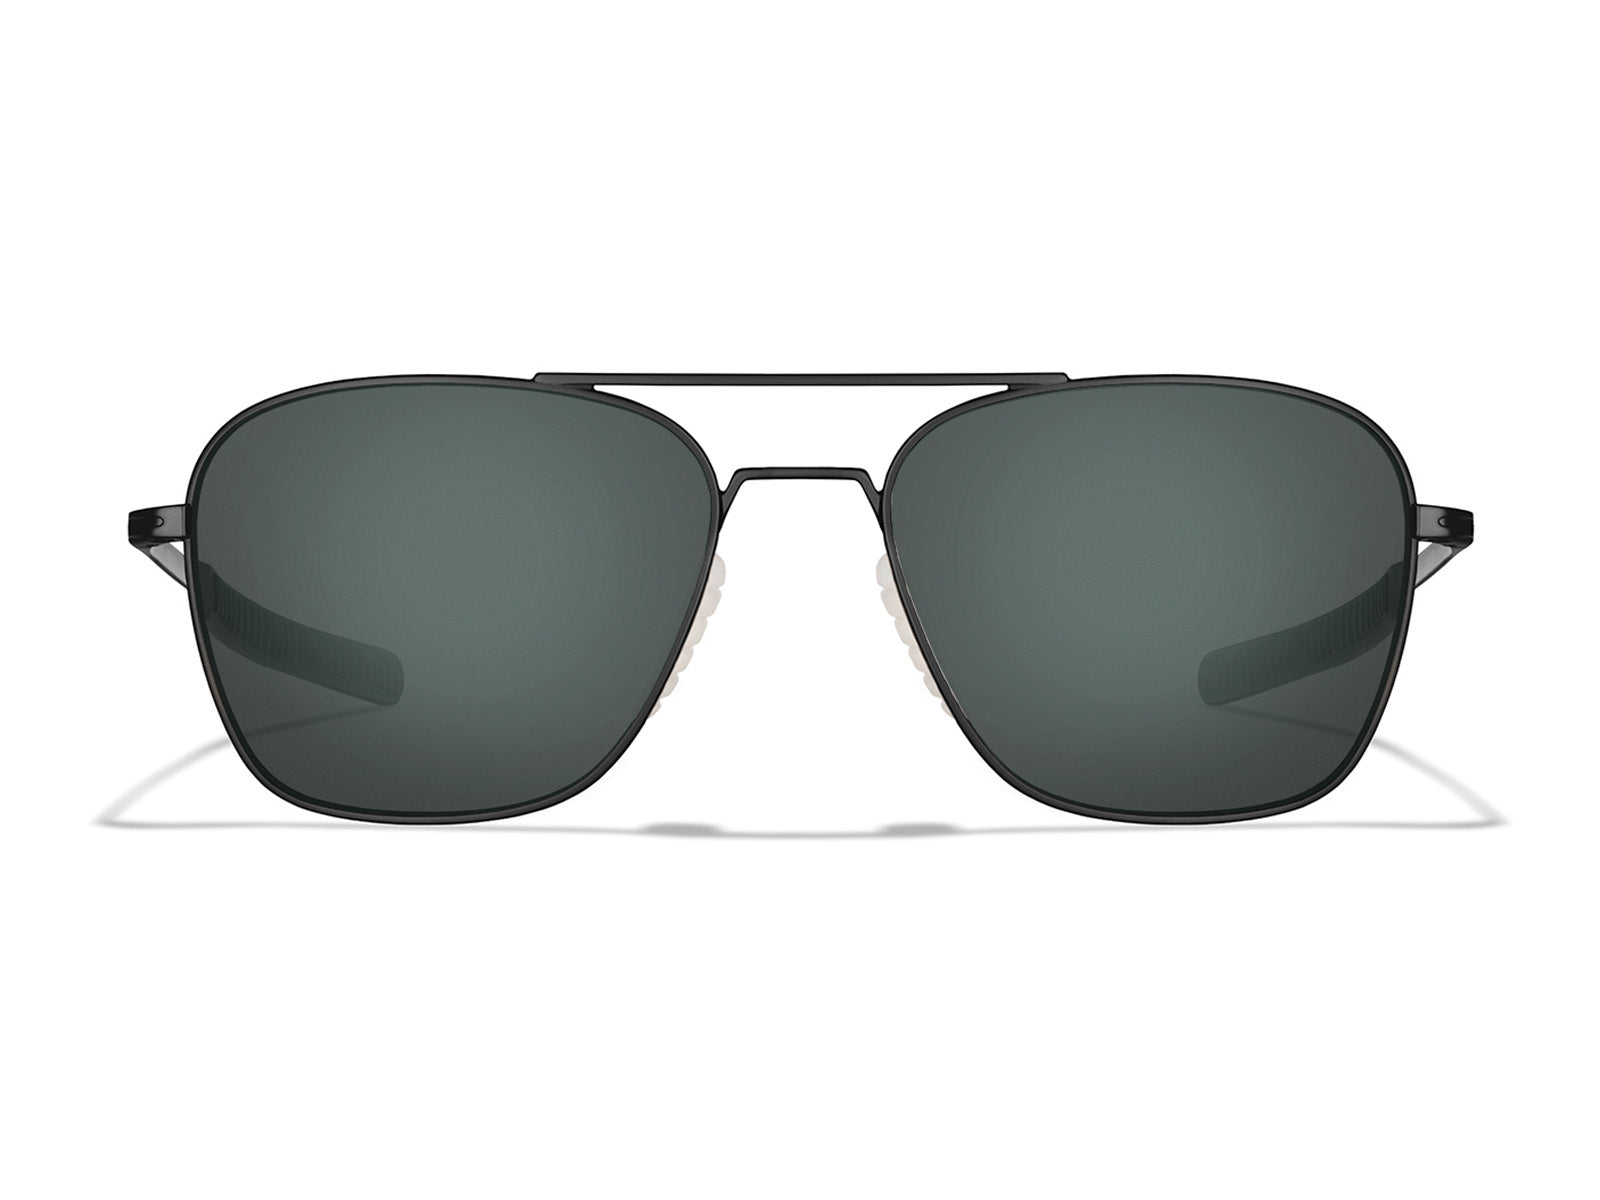 Square Aviators - Running Sunglasses - Sports Sunglasses